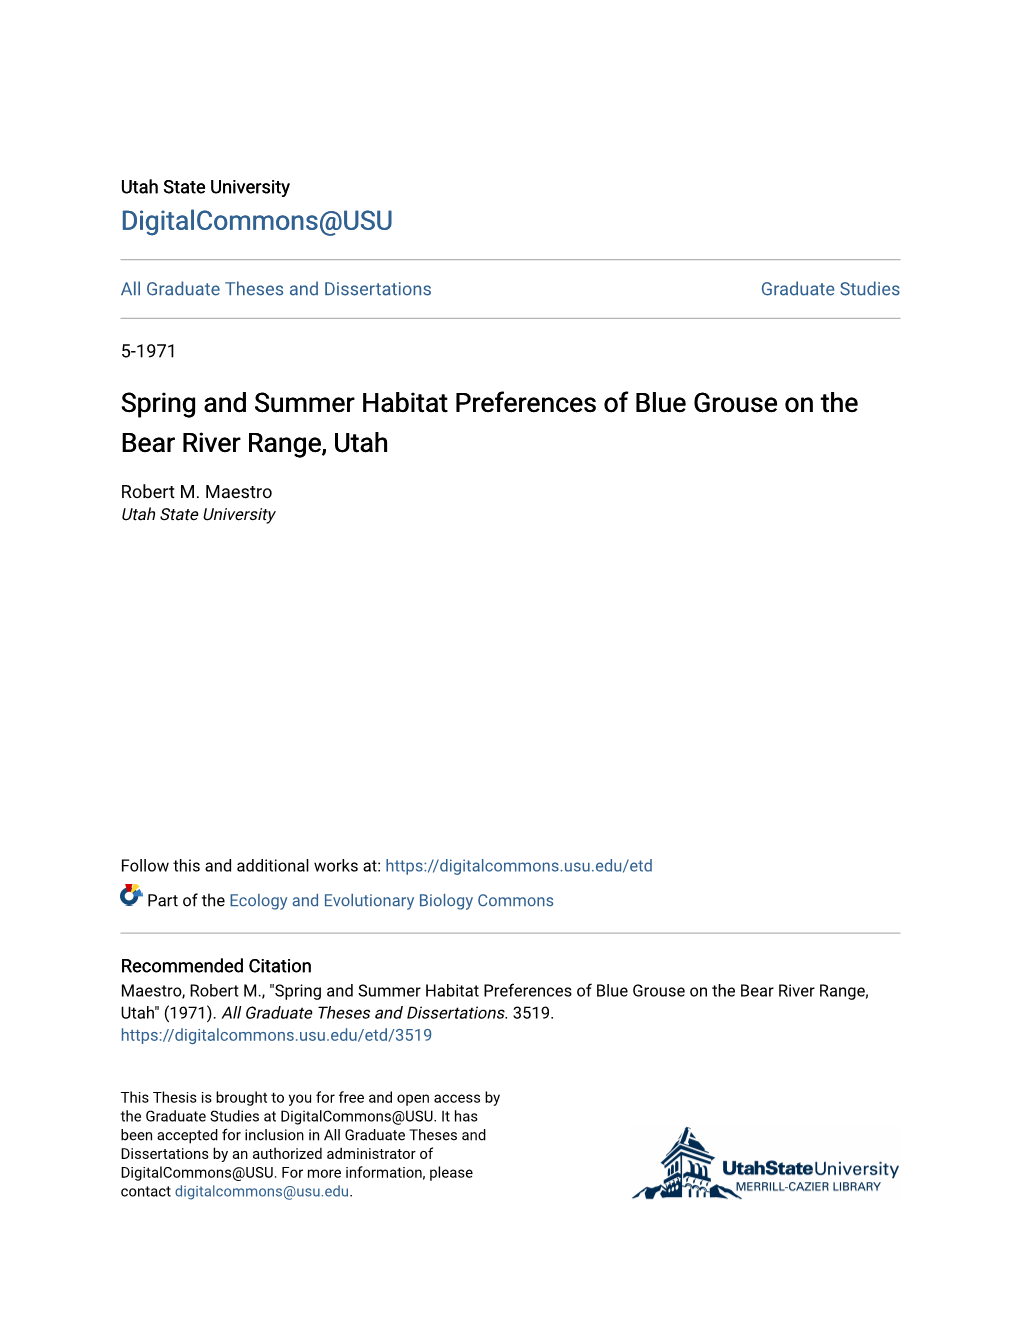 Spring and Summer Habitat Preferences of Blue Grouse on the Bear River Range, Utah